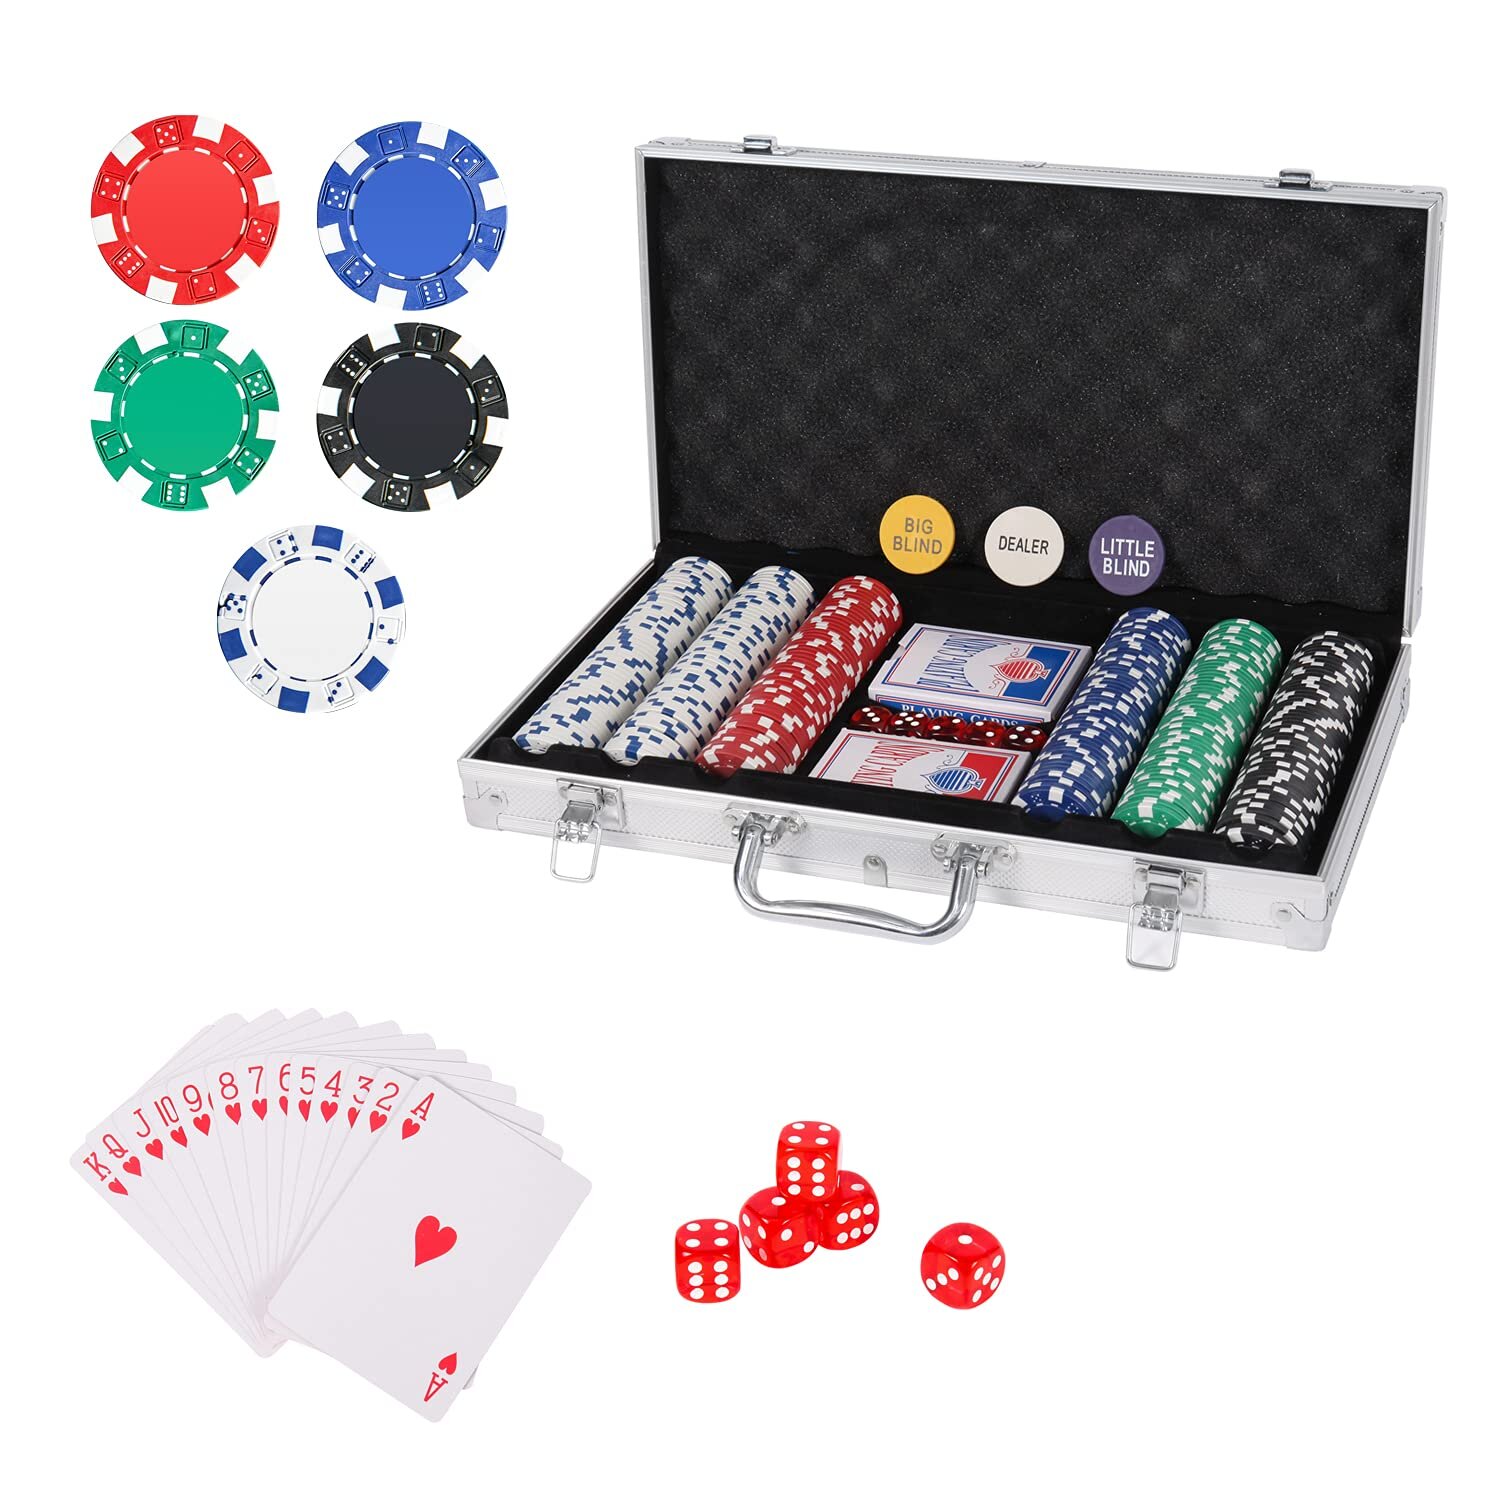 Little & Big Blind All in Poker Chip Casino Quality 4pcs/set Dealer Button